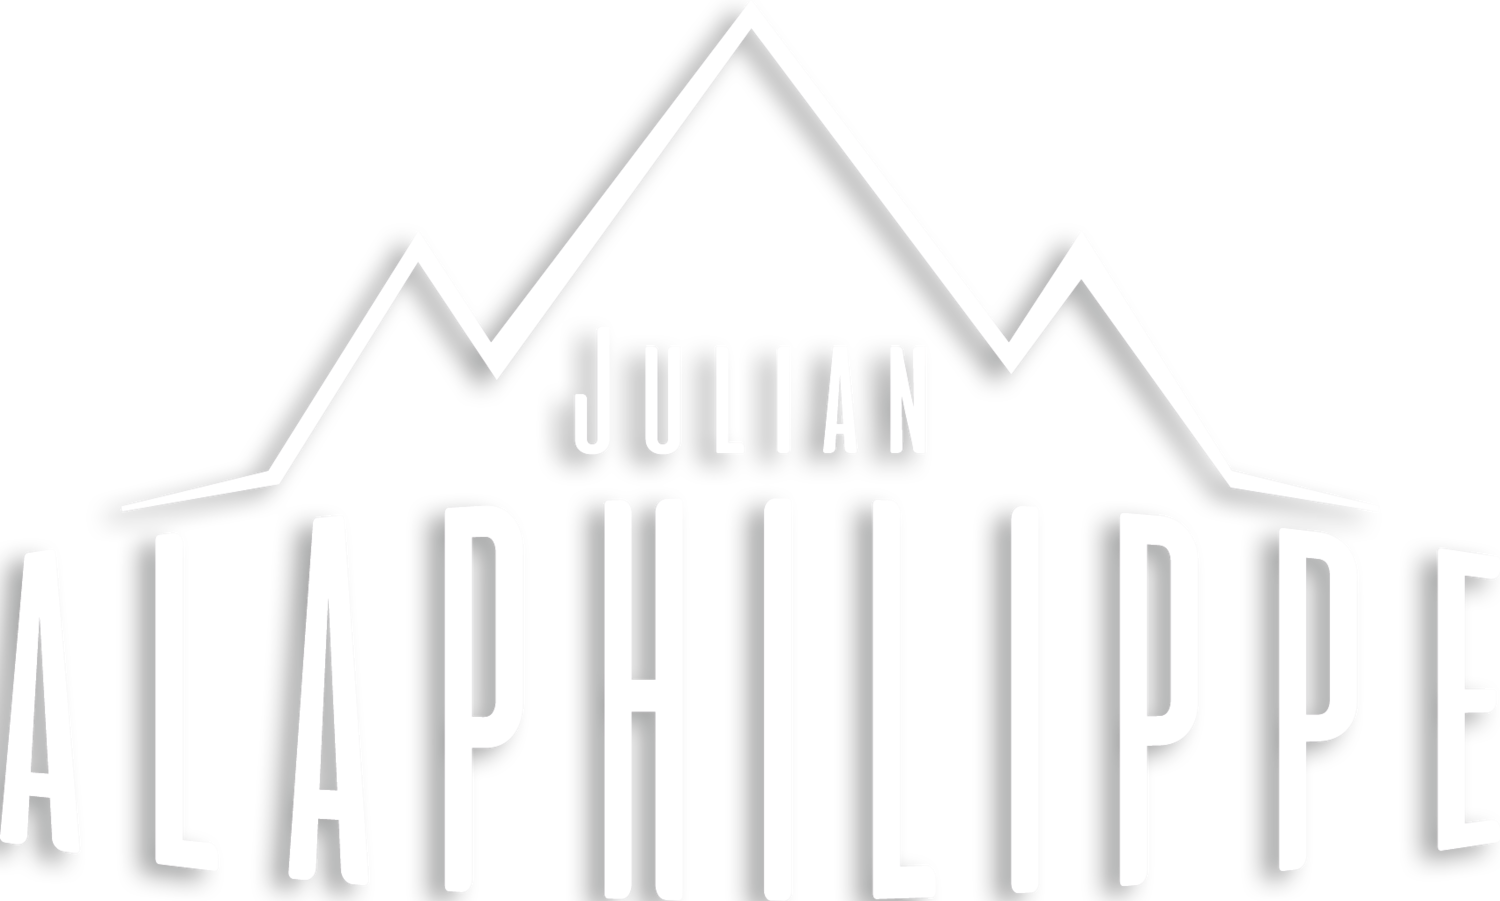 Julian Alaphilippe